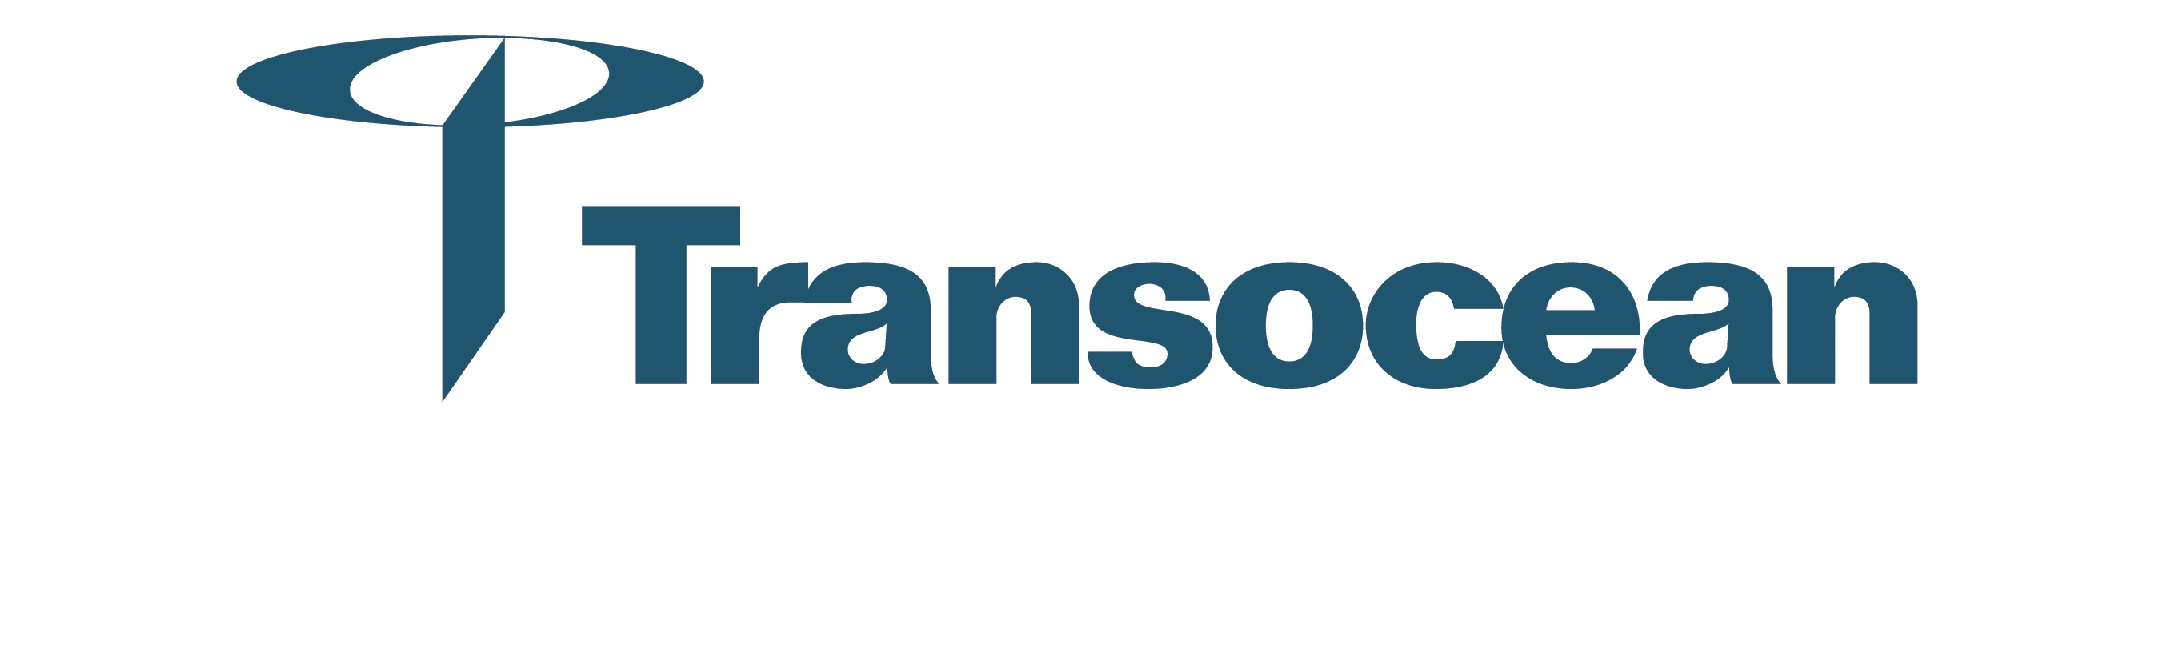 Transocean Services logo